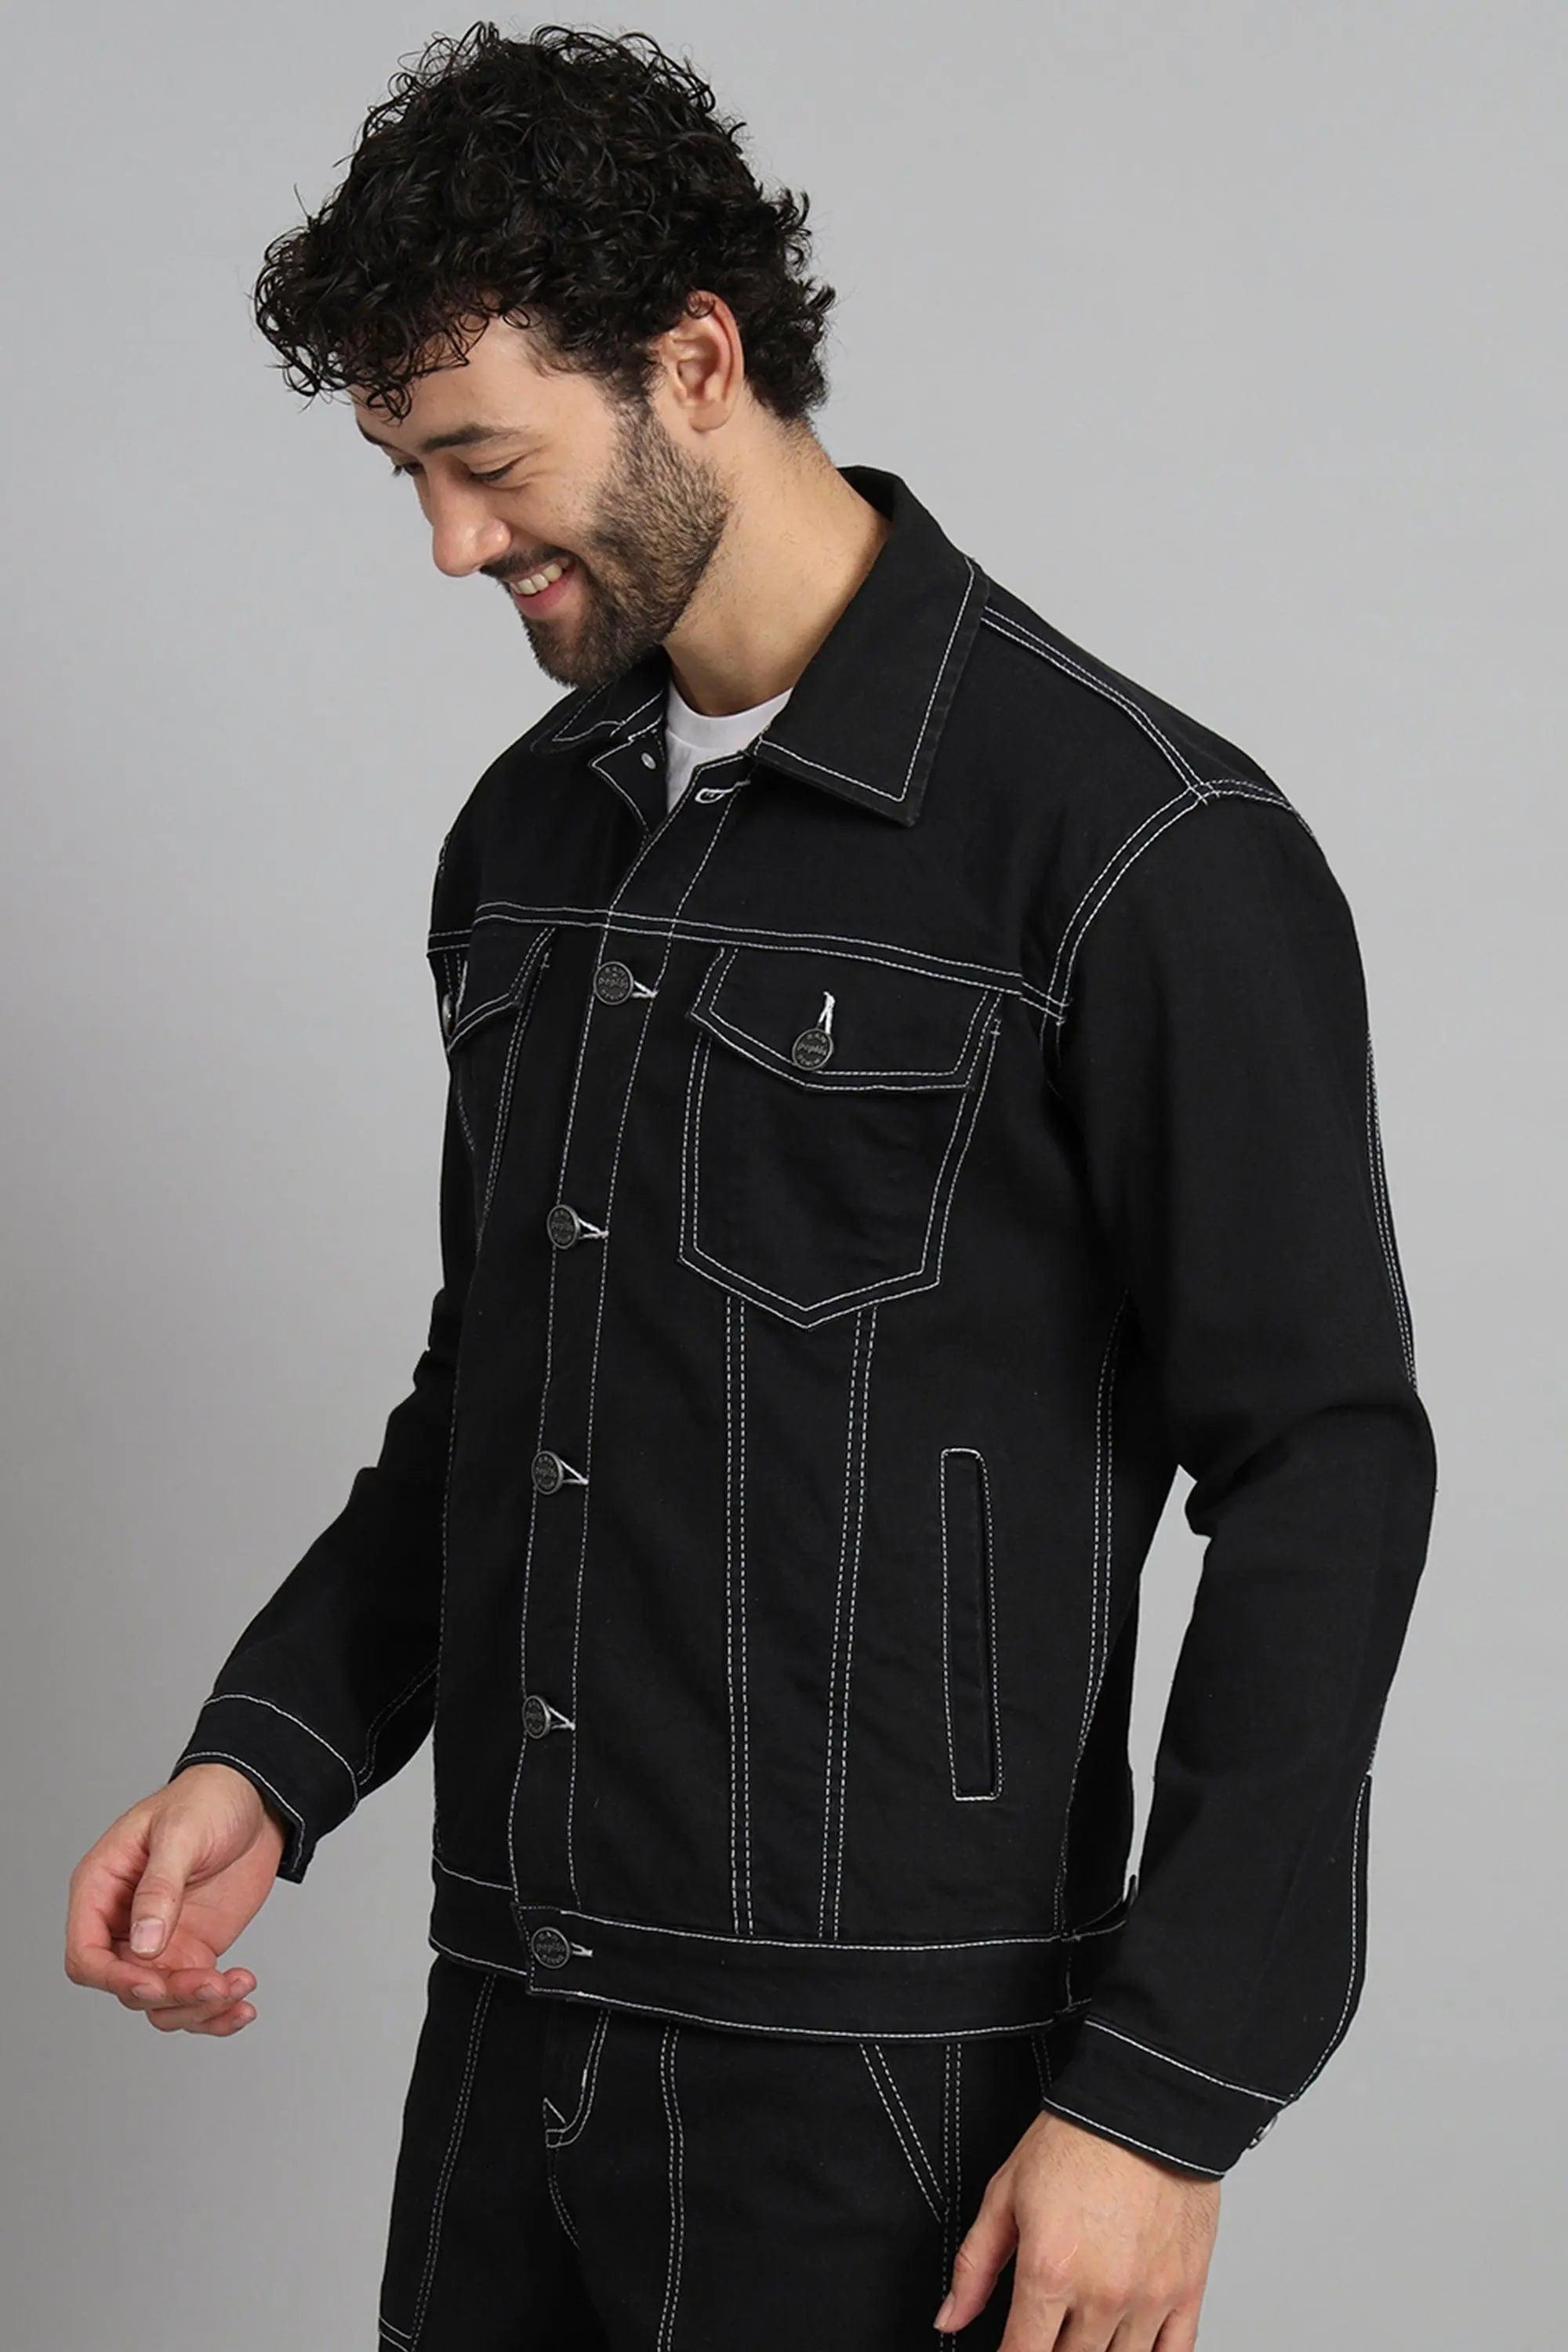 Buy Prototype Full SleeveSolid Men Denim Jacket_TR-TRUL-XL at Amazon.in